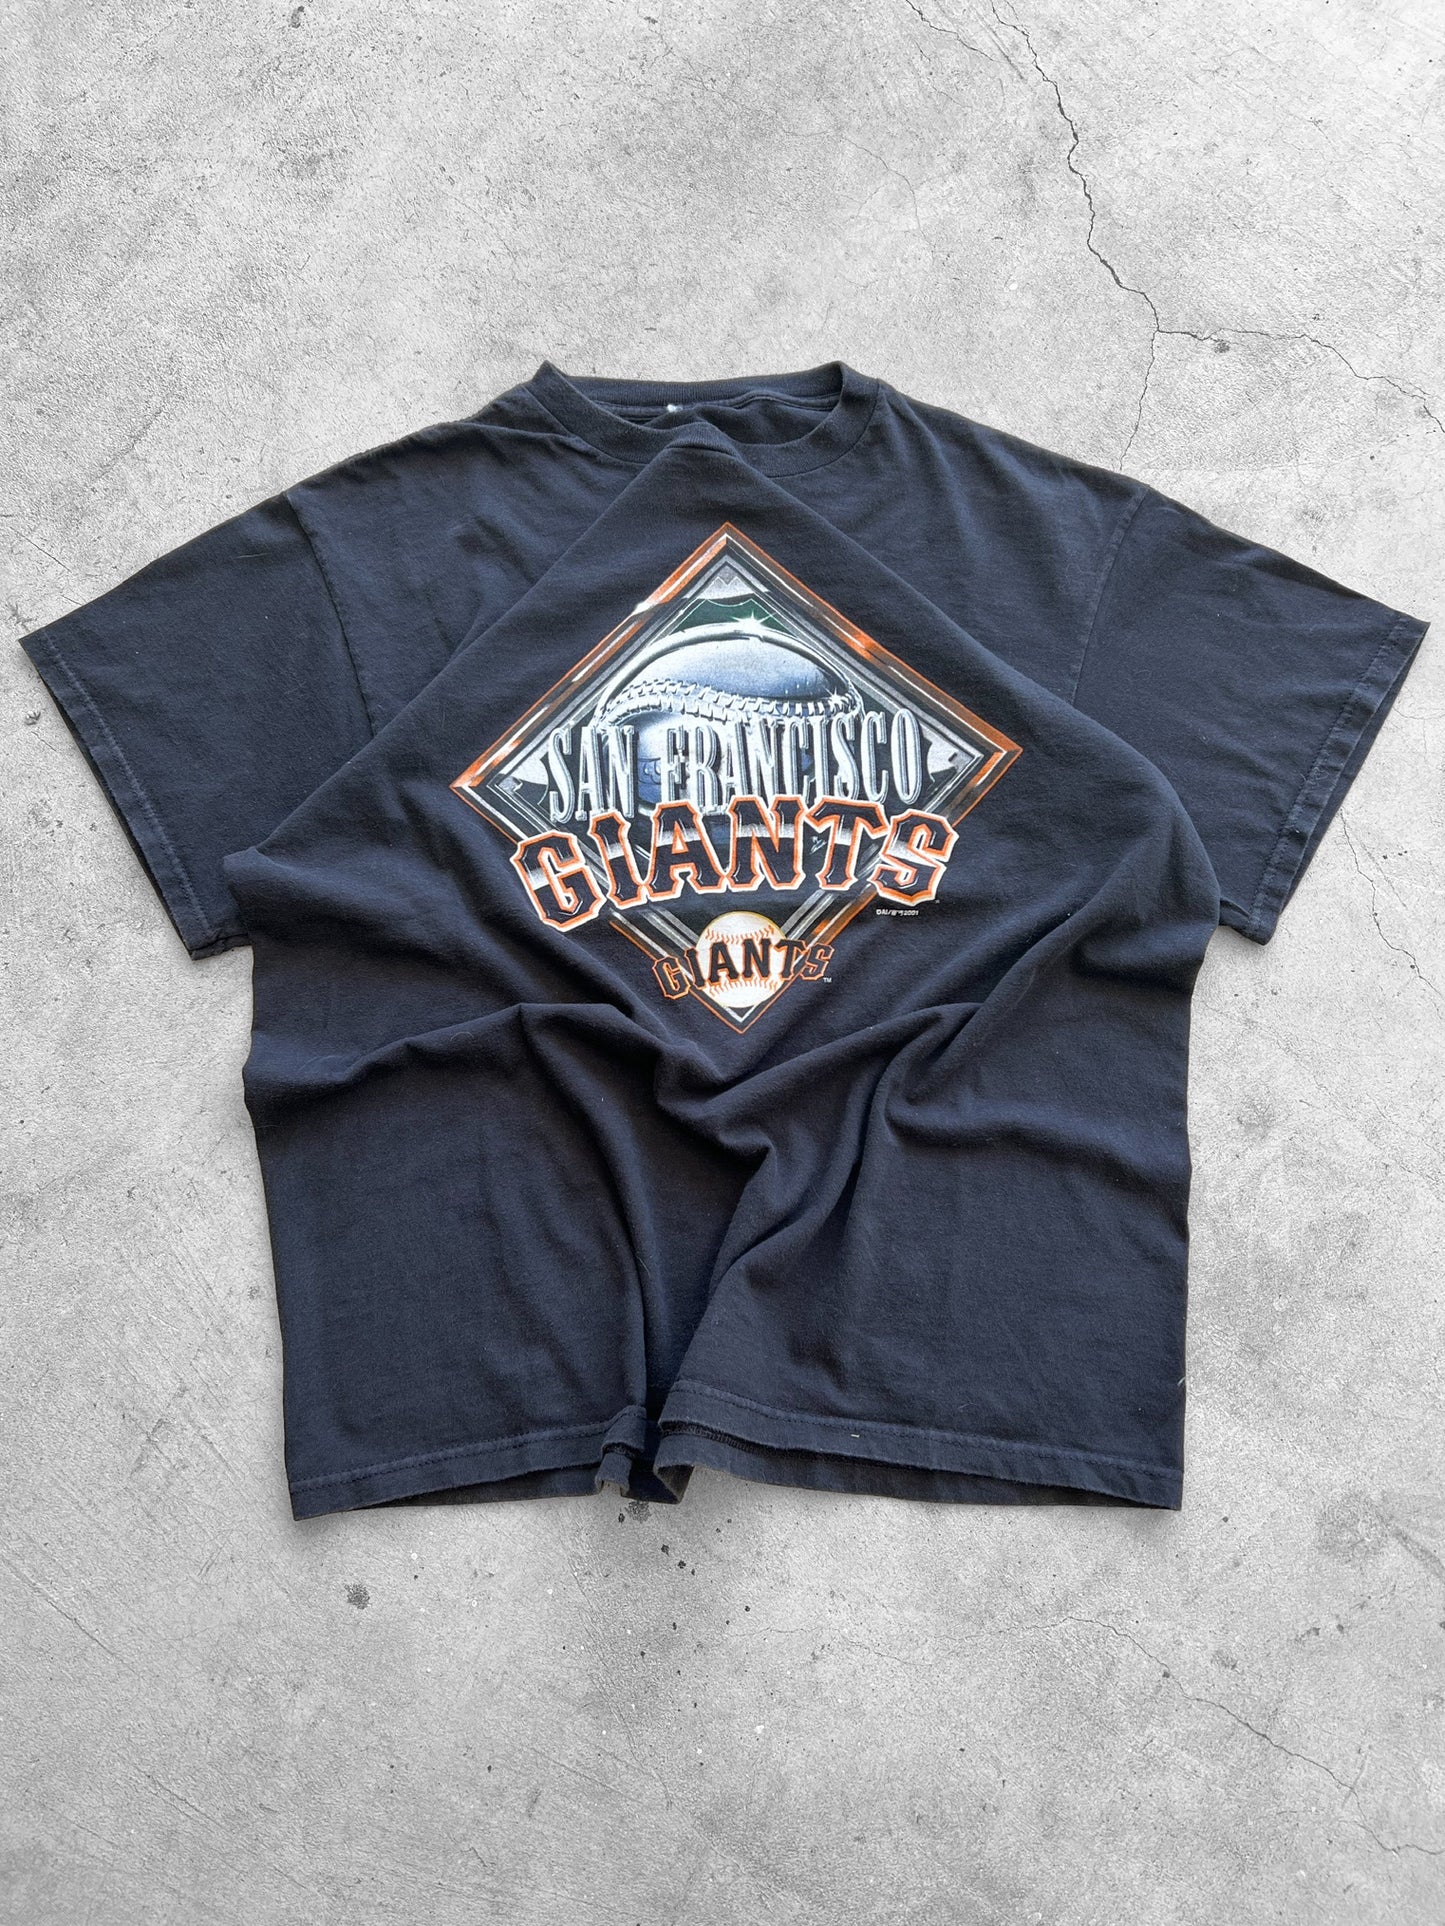 San Francisco Giants MLB Shirt - XL